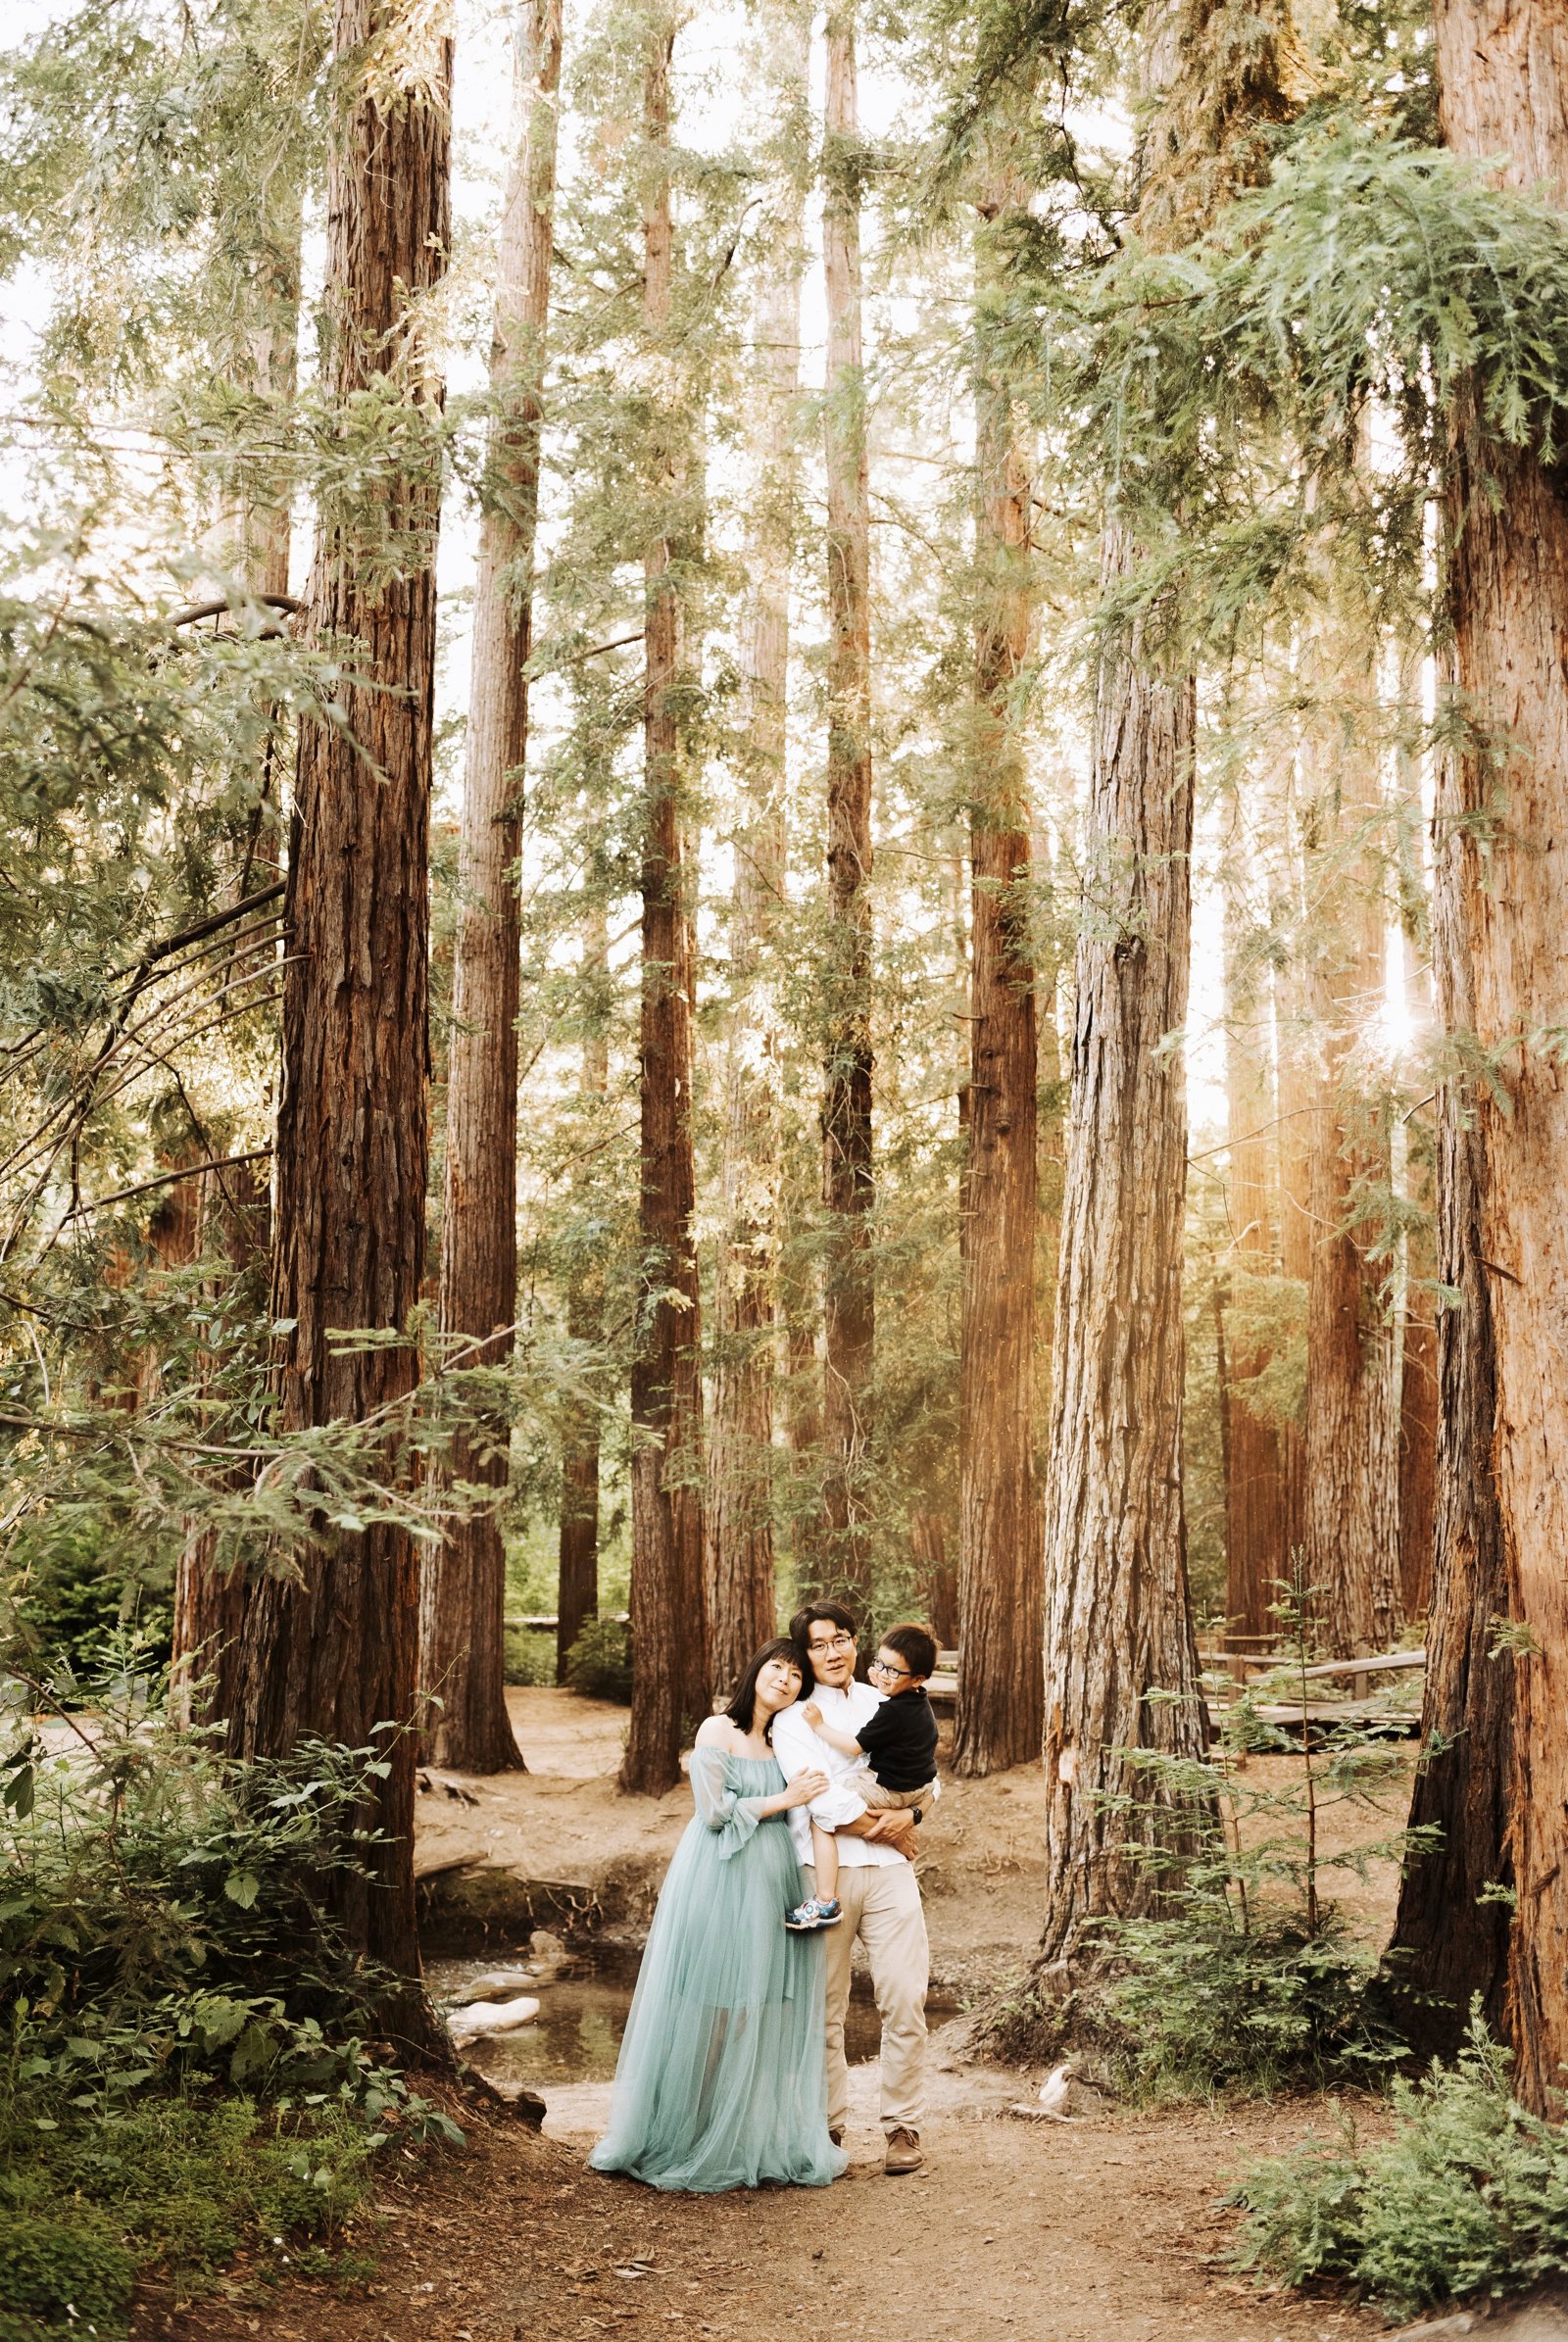 south bay family photographer san jose maternity photography los altos redwoods photoshoot 34.jpg